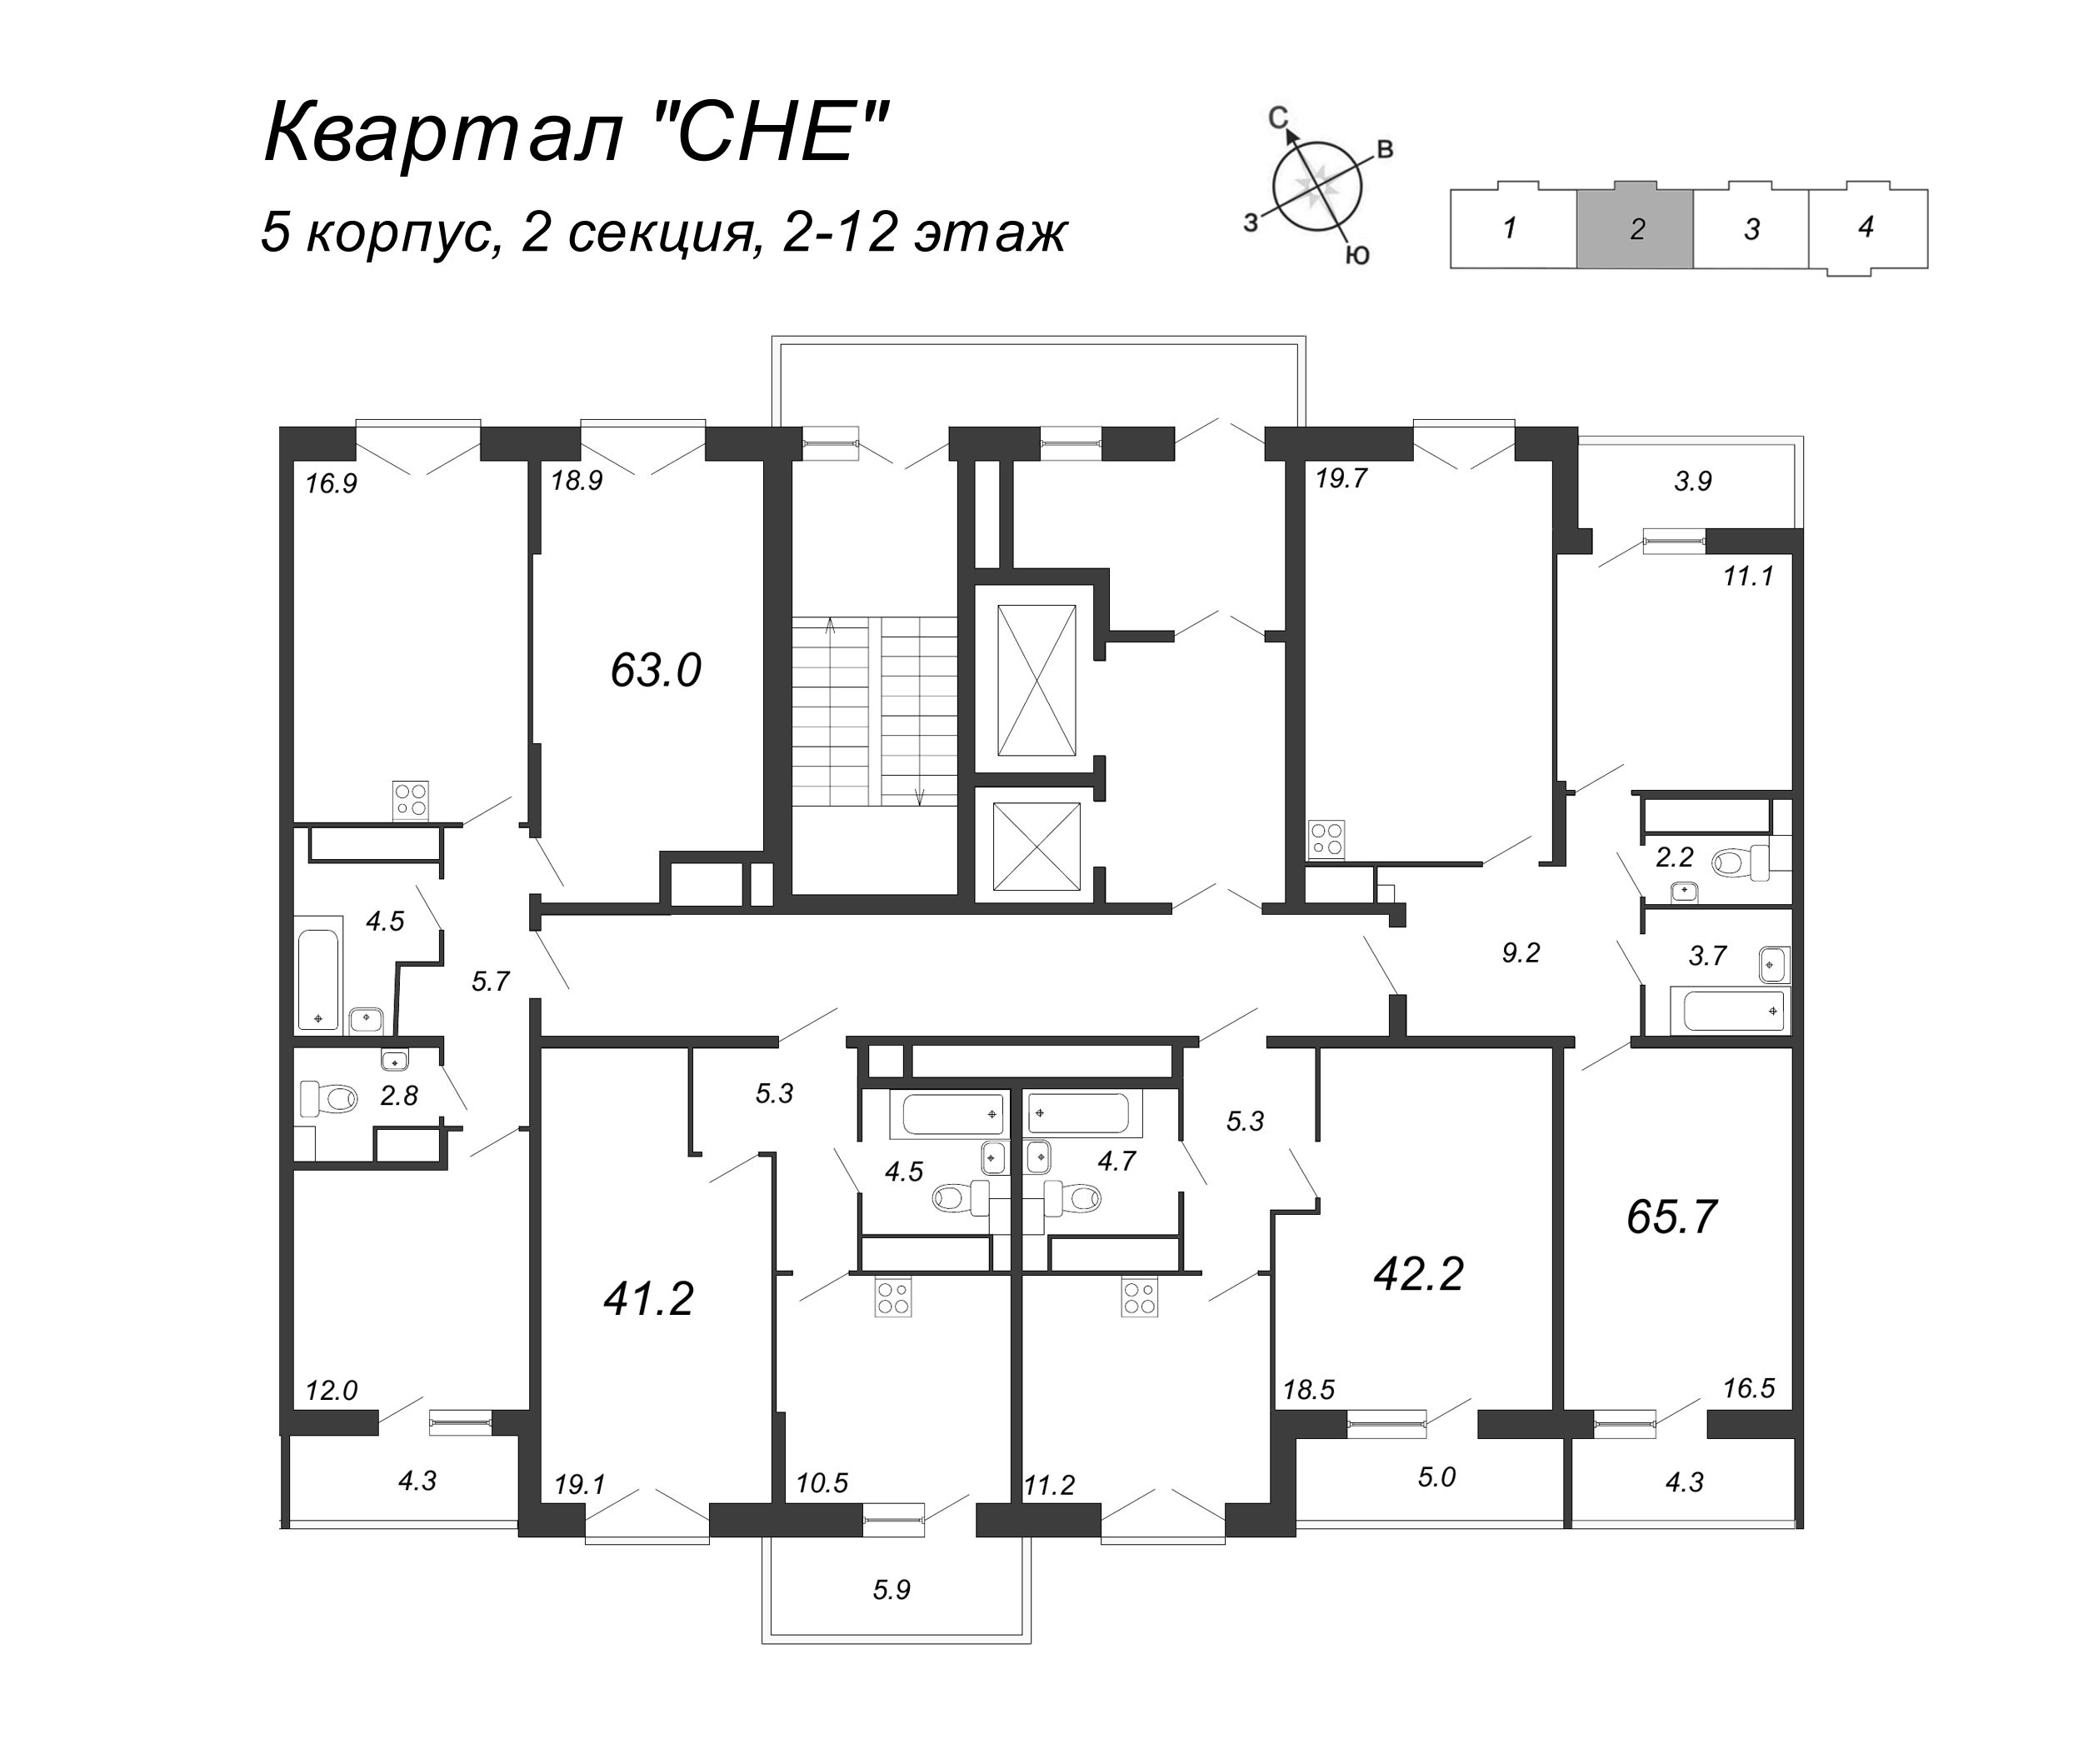 1-комнатная квартира, 42.1 м² в ЖК "Квартал Che" - планировка этажа